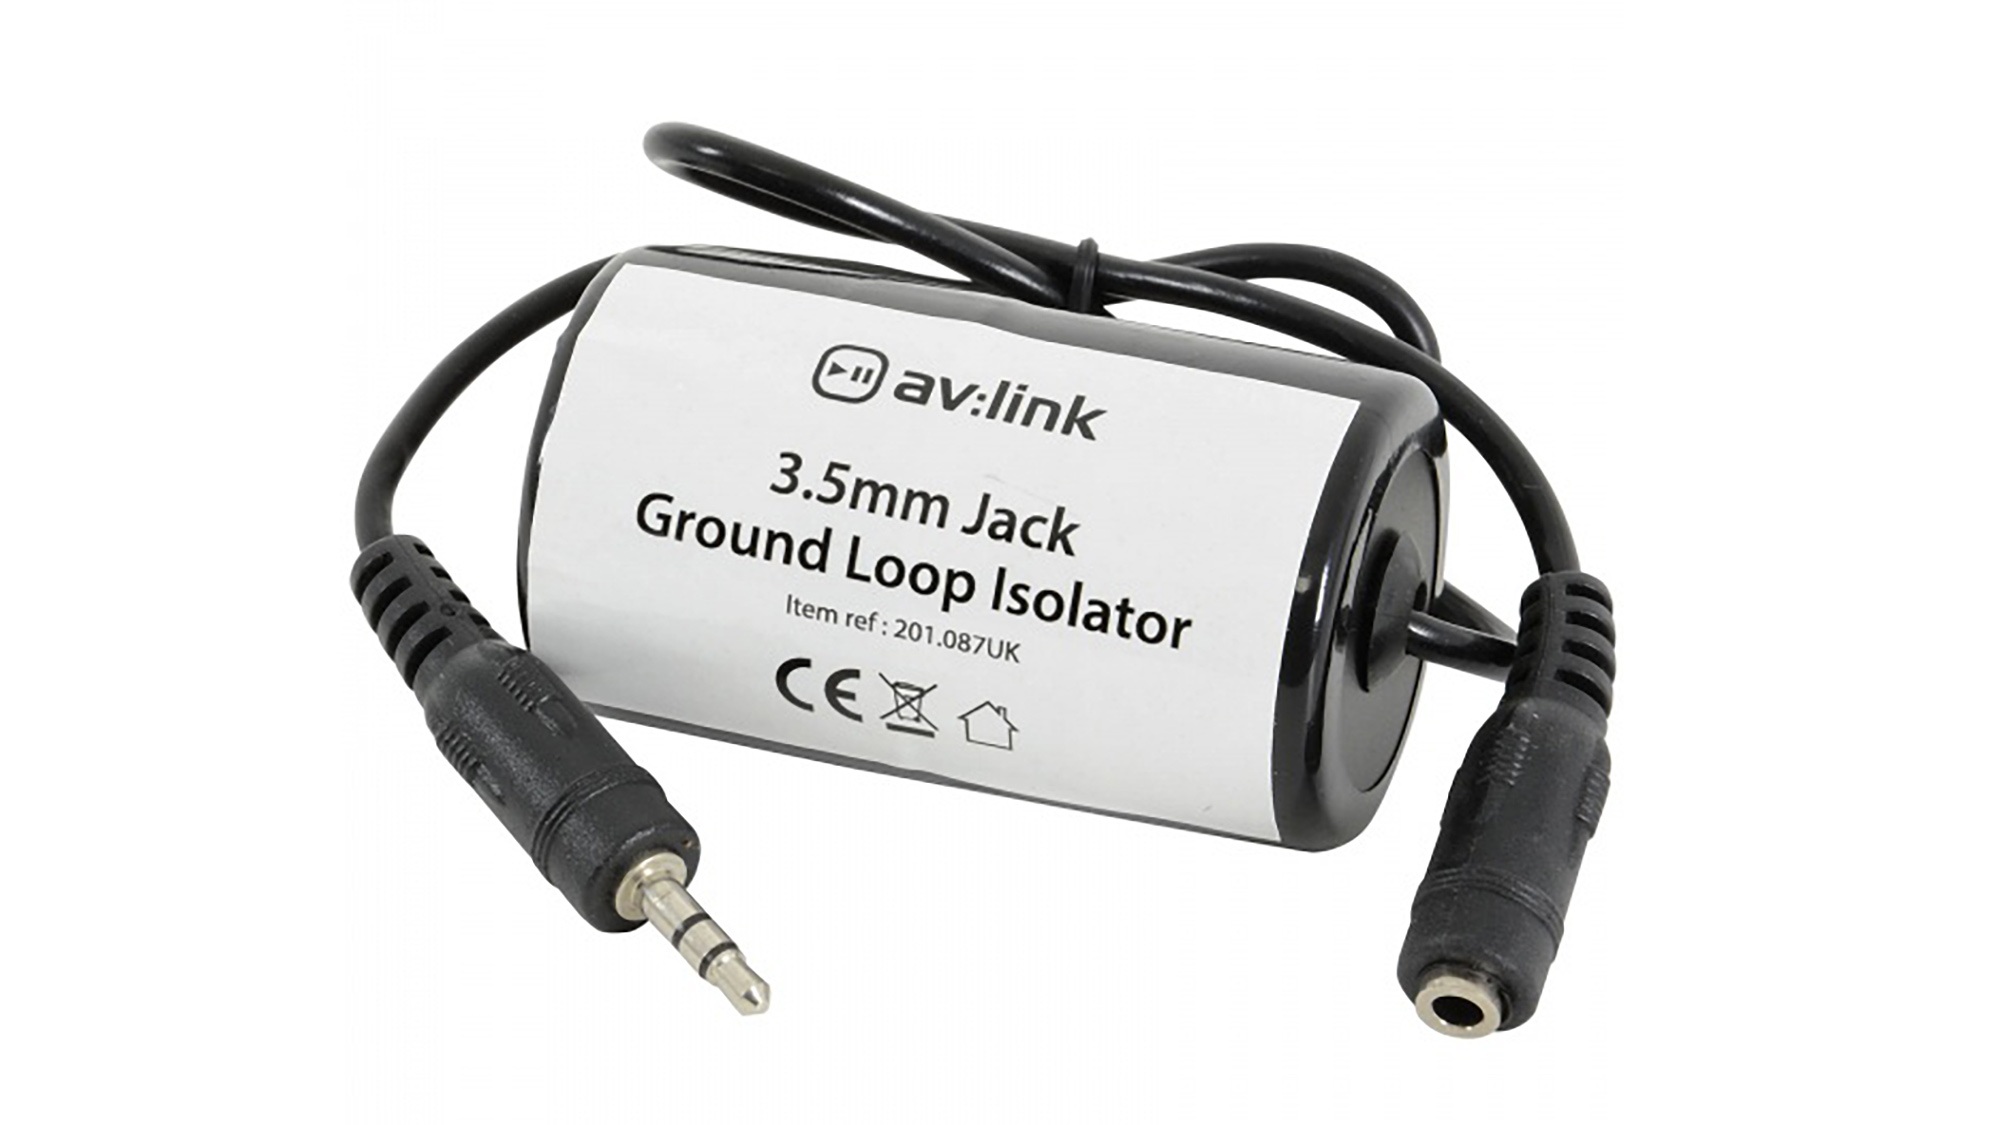 Lithe Audio 01589 Endschleifenisolator beschriftet als 3.5mm Jack Ground Loop Isolator